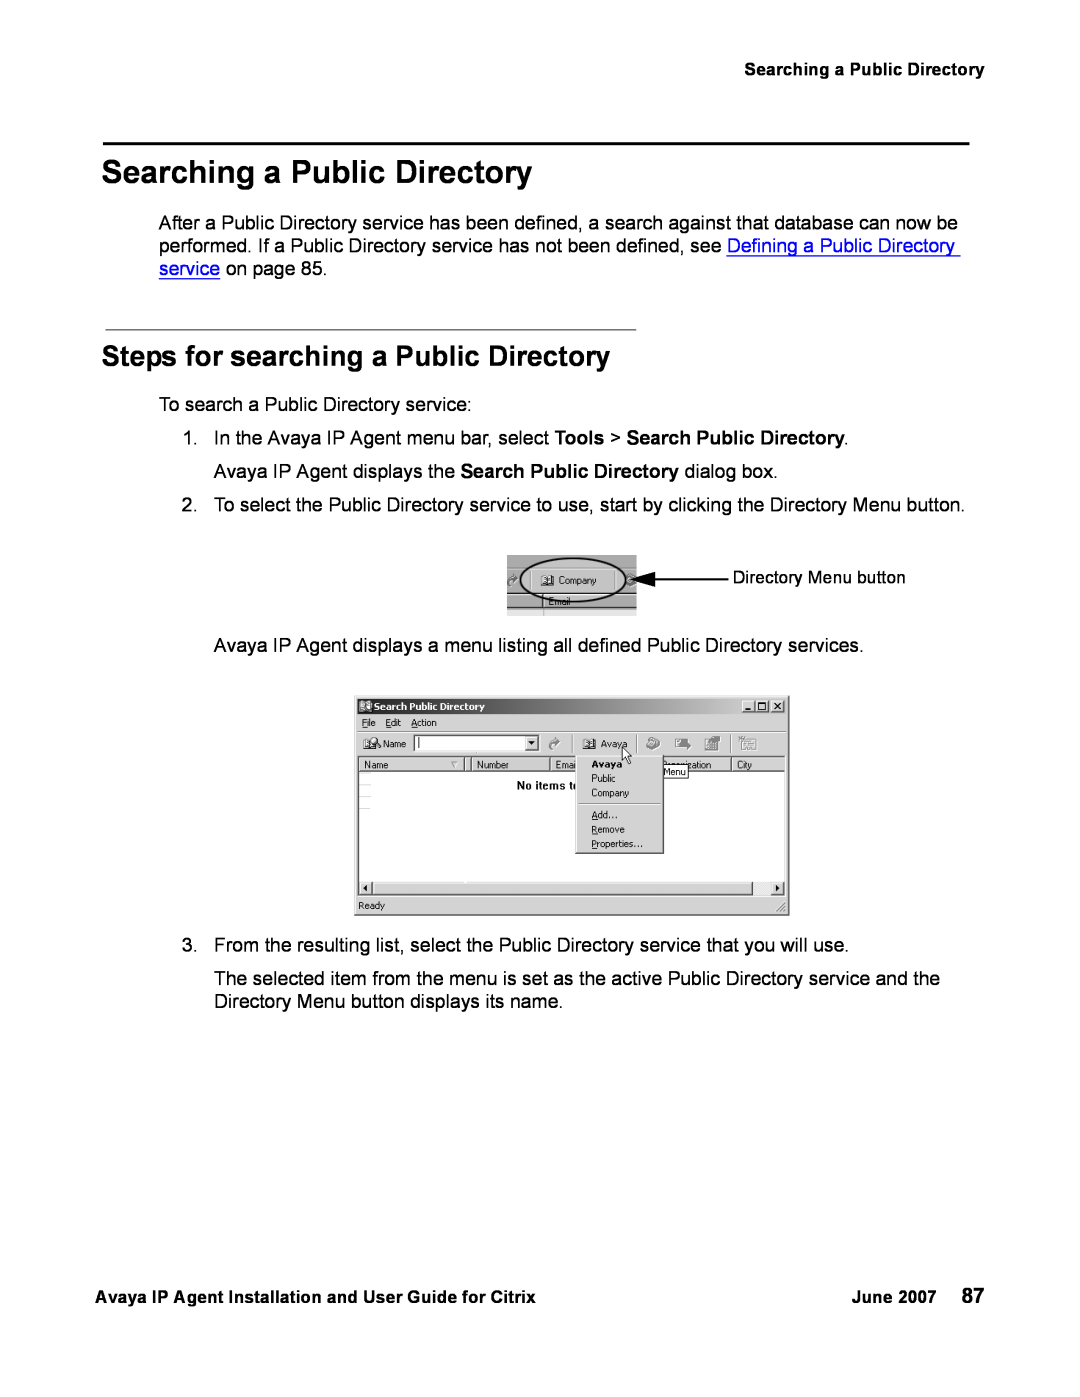 Avaya 7 manual Searching a Public Directory, Steps for searching a Public Directory 